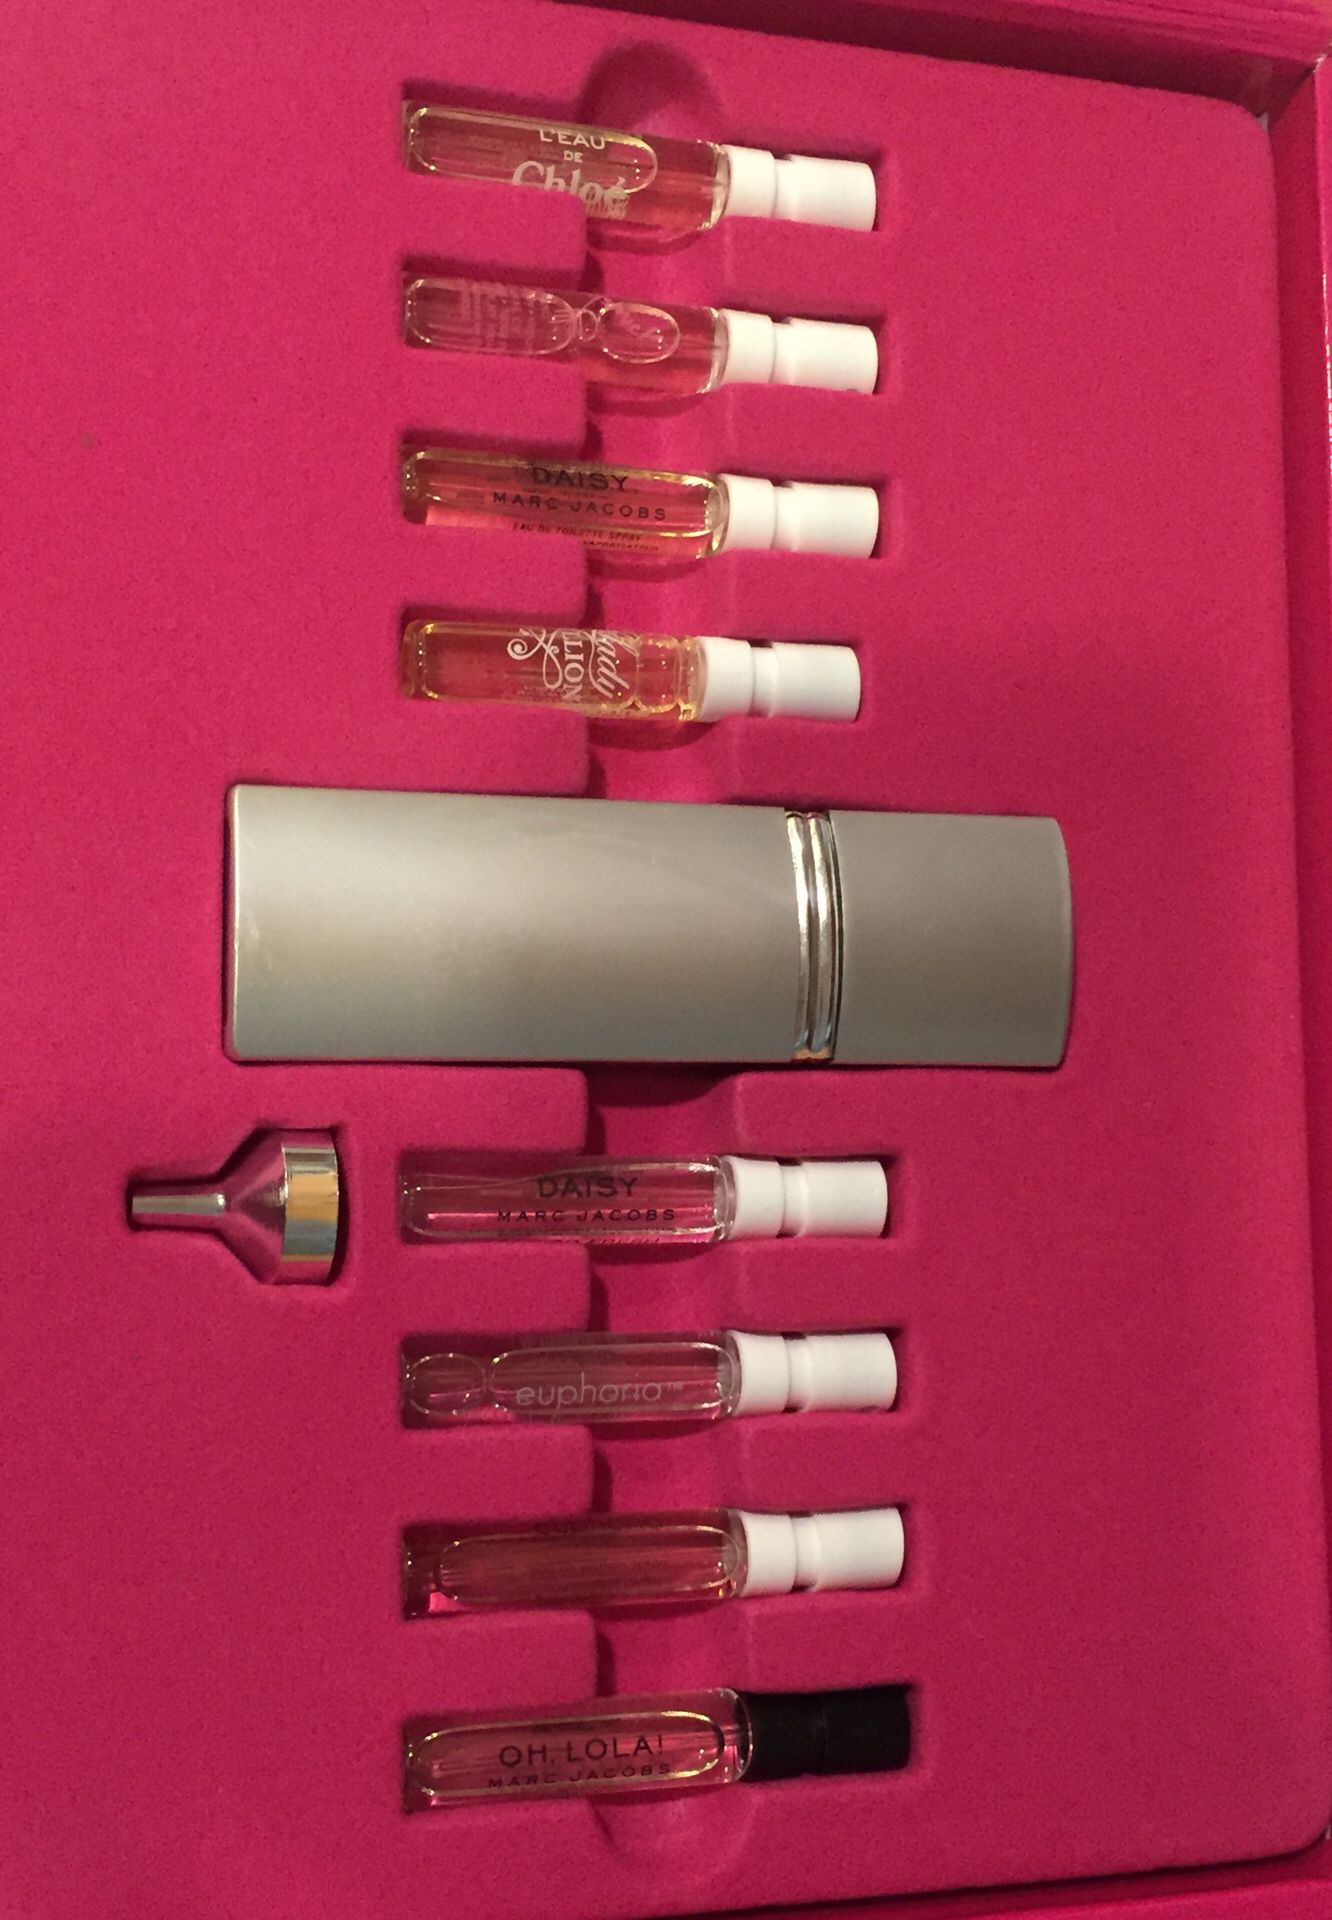 Macy’s perfume sampler— see pics for varieties included